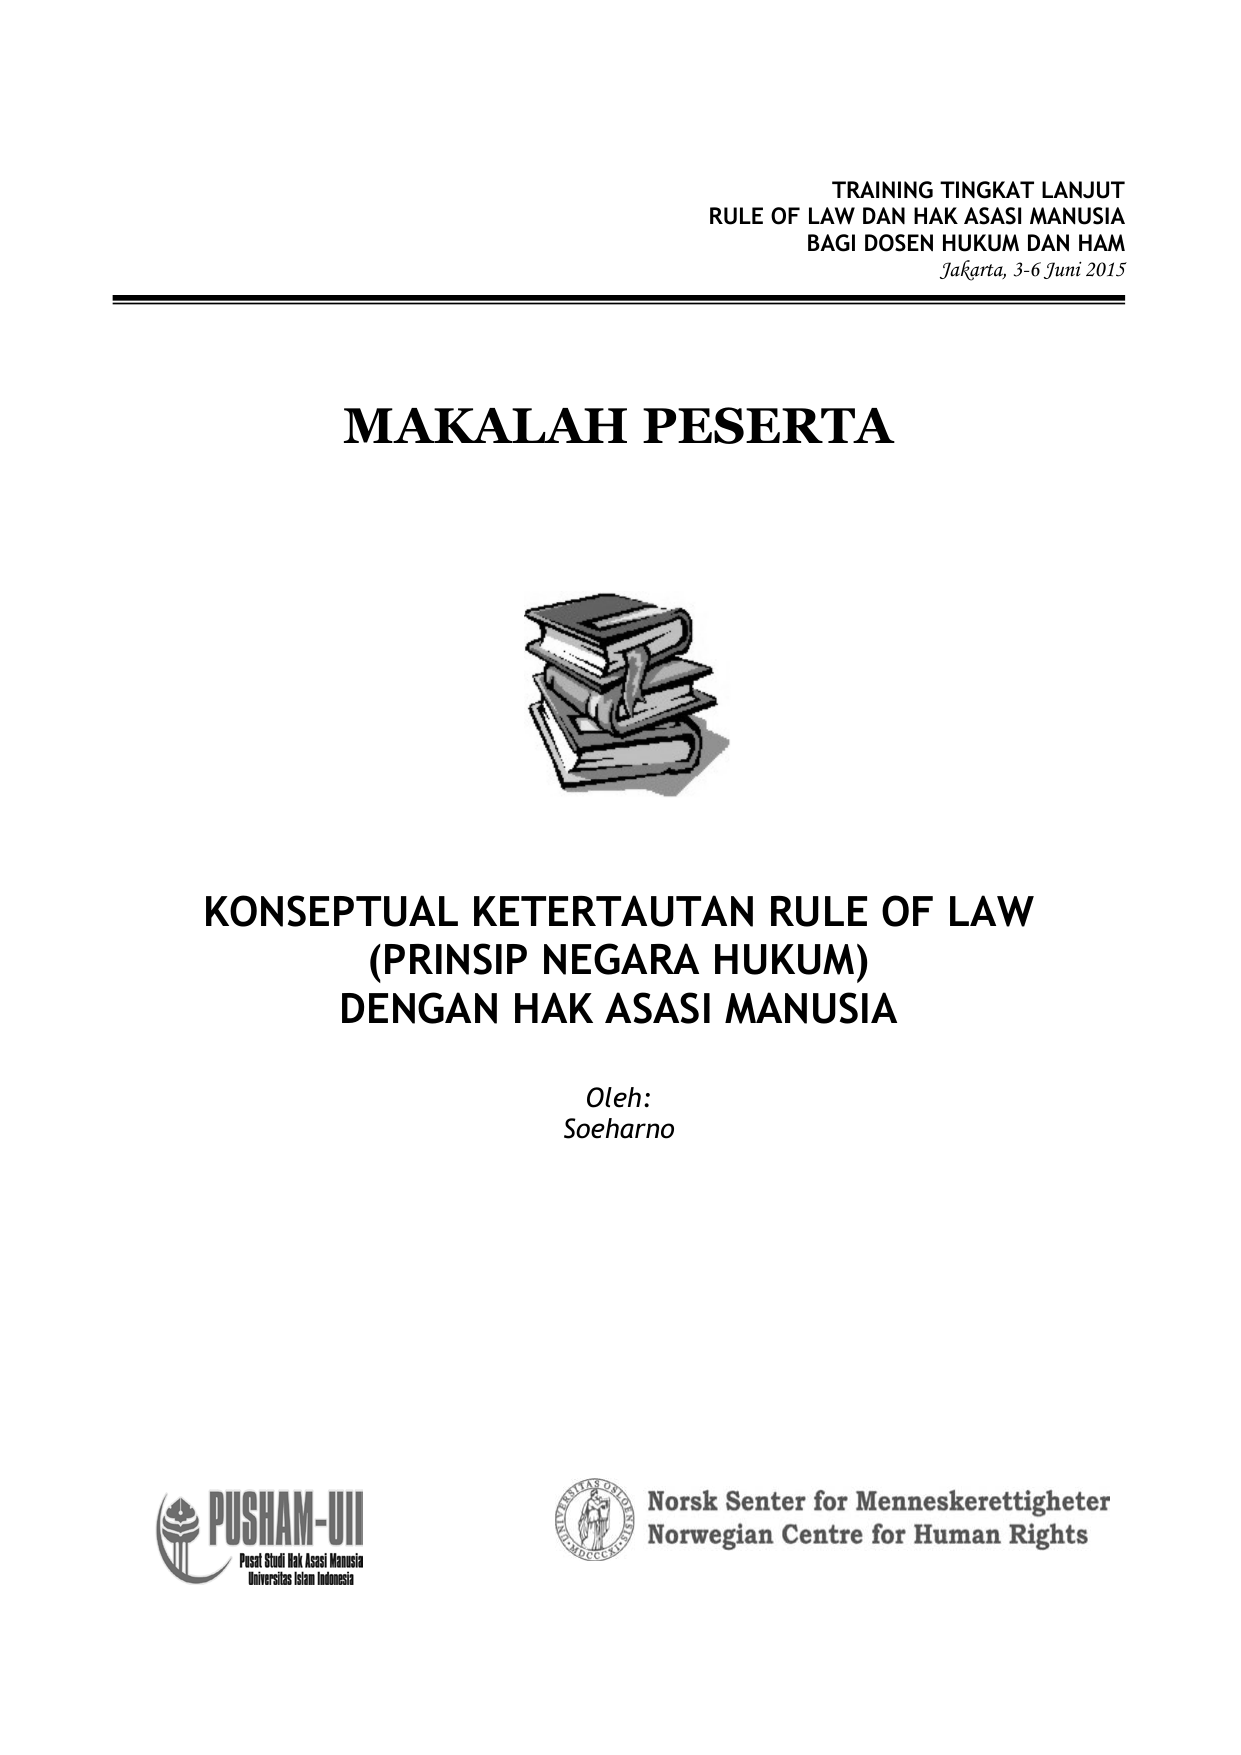 Prinsip Negara Hukum